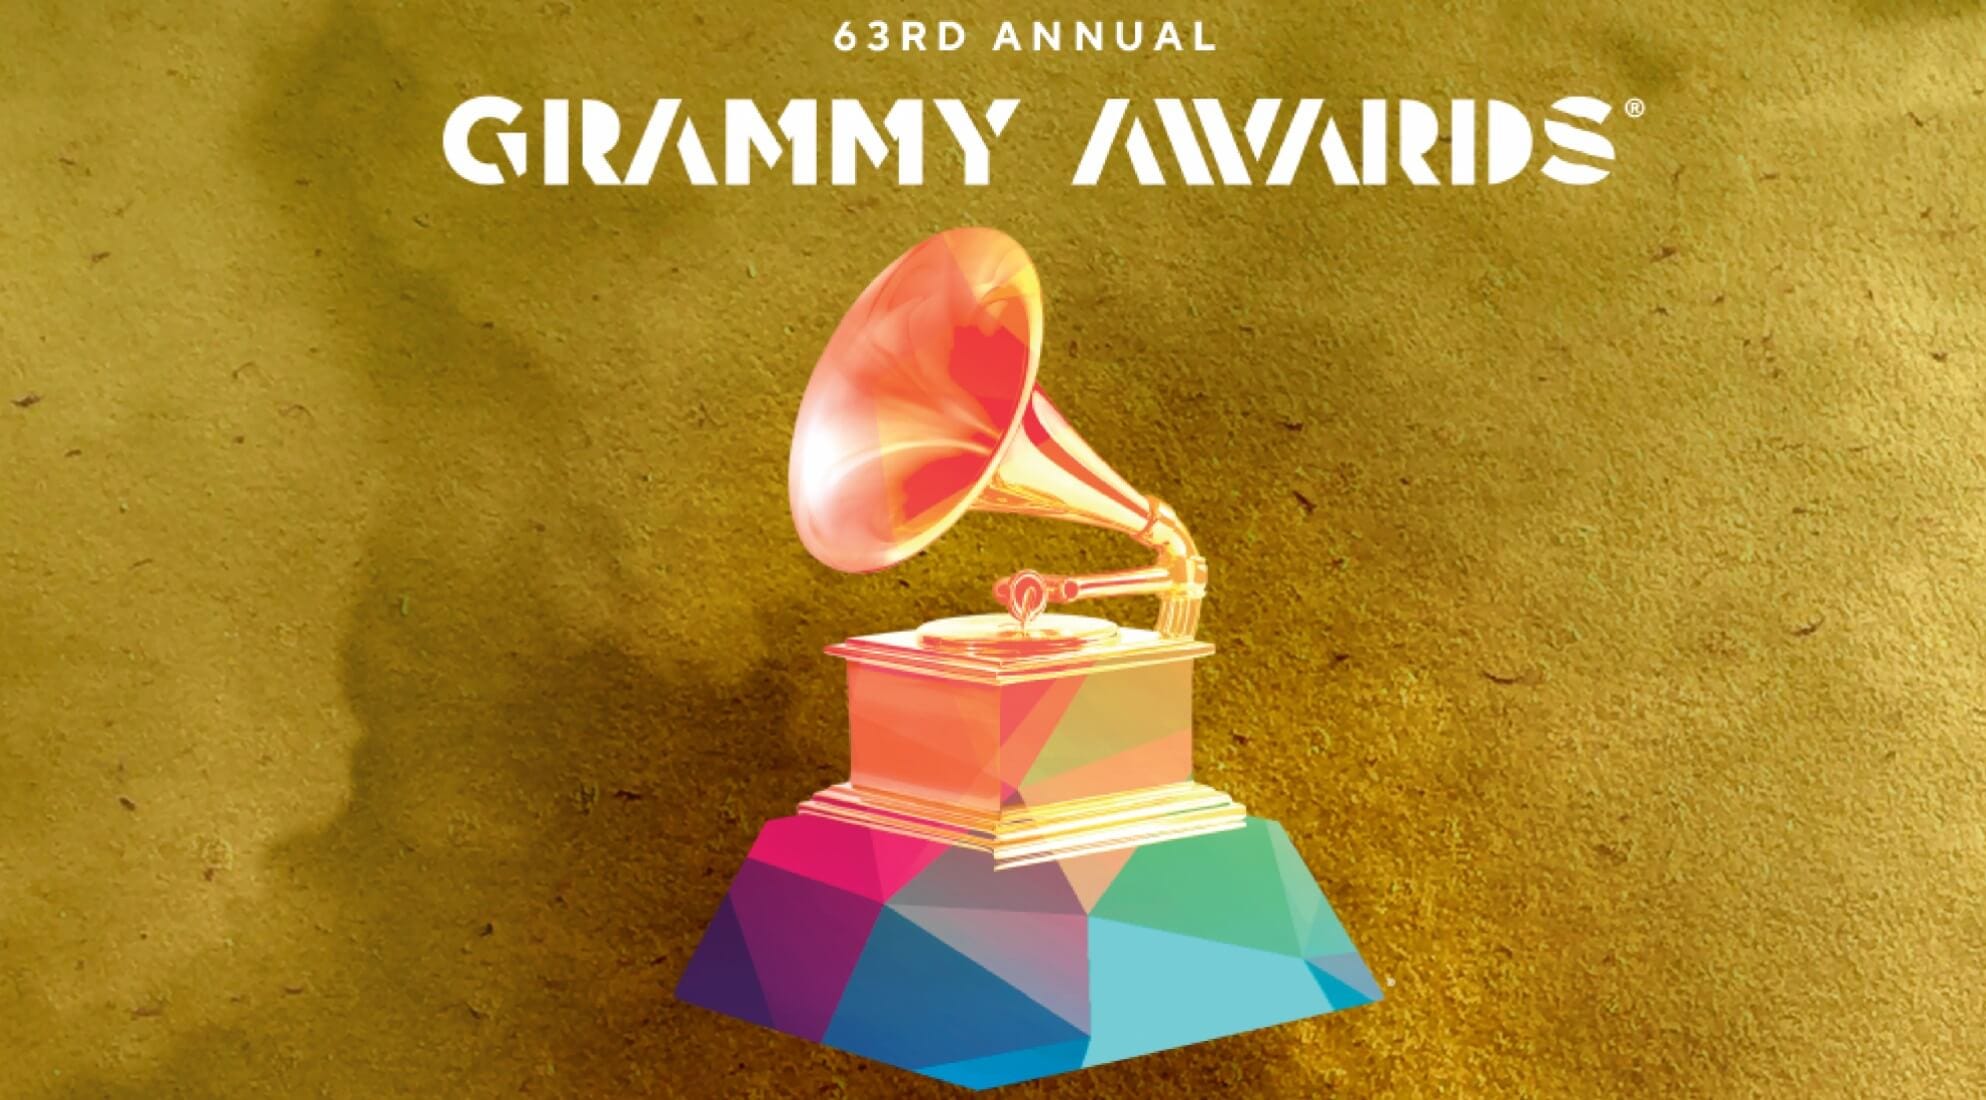 2021 Grammy Awards Final Predictions By Rui Alves Mar 2021 Rock N Heavy